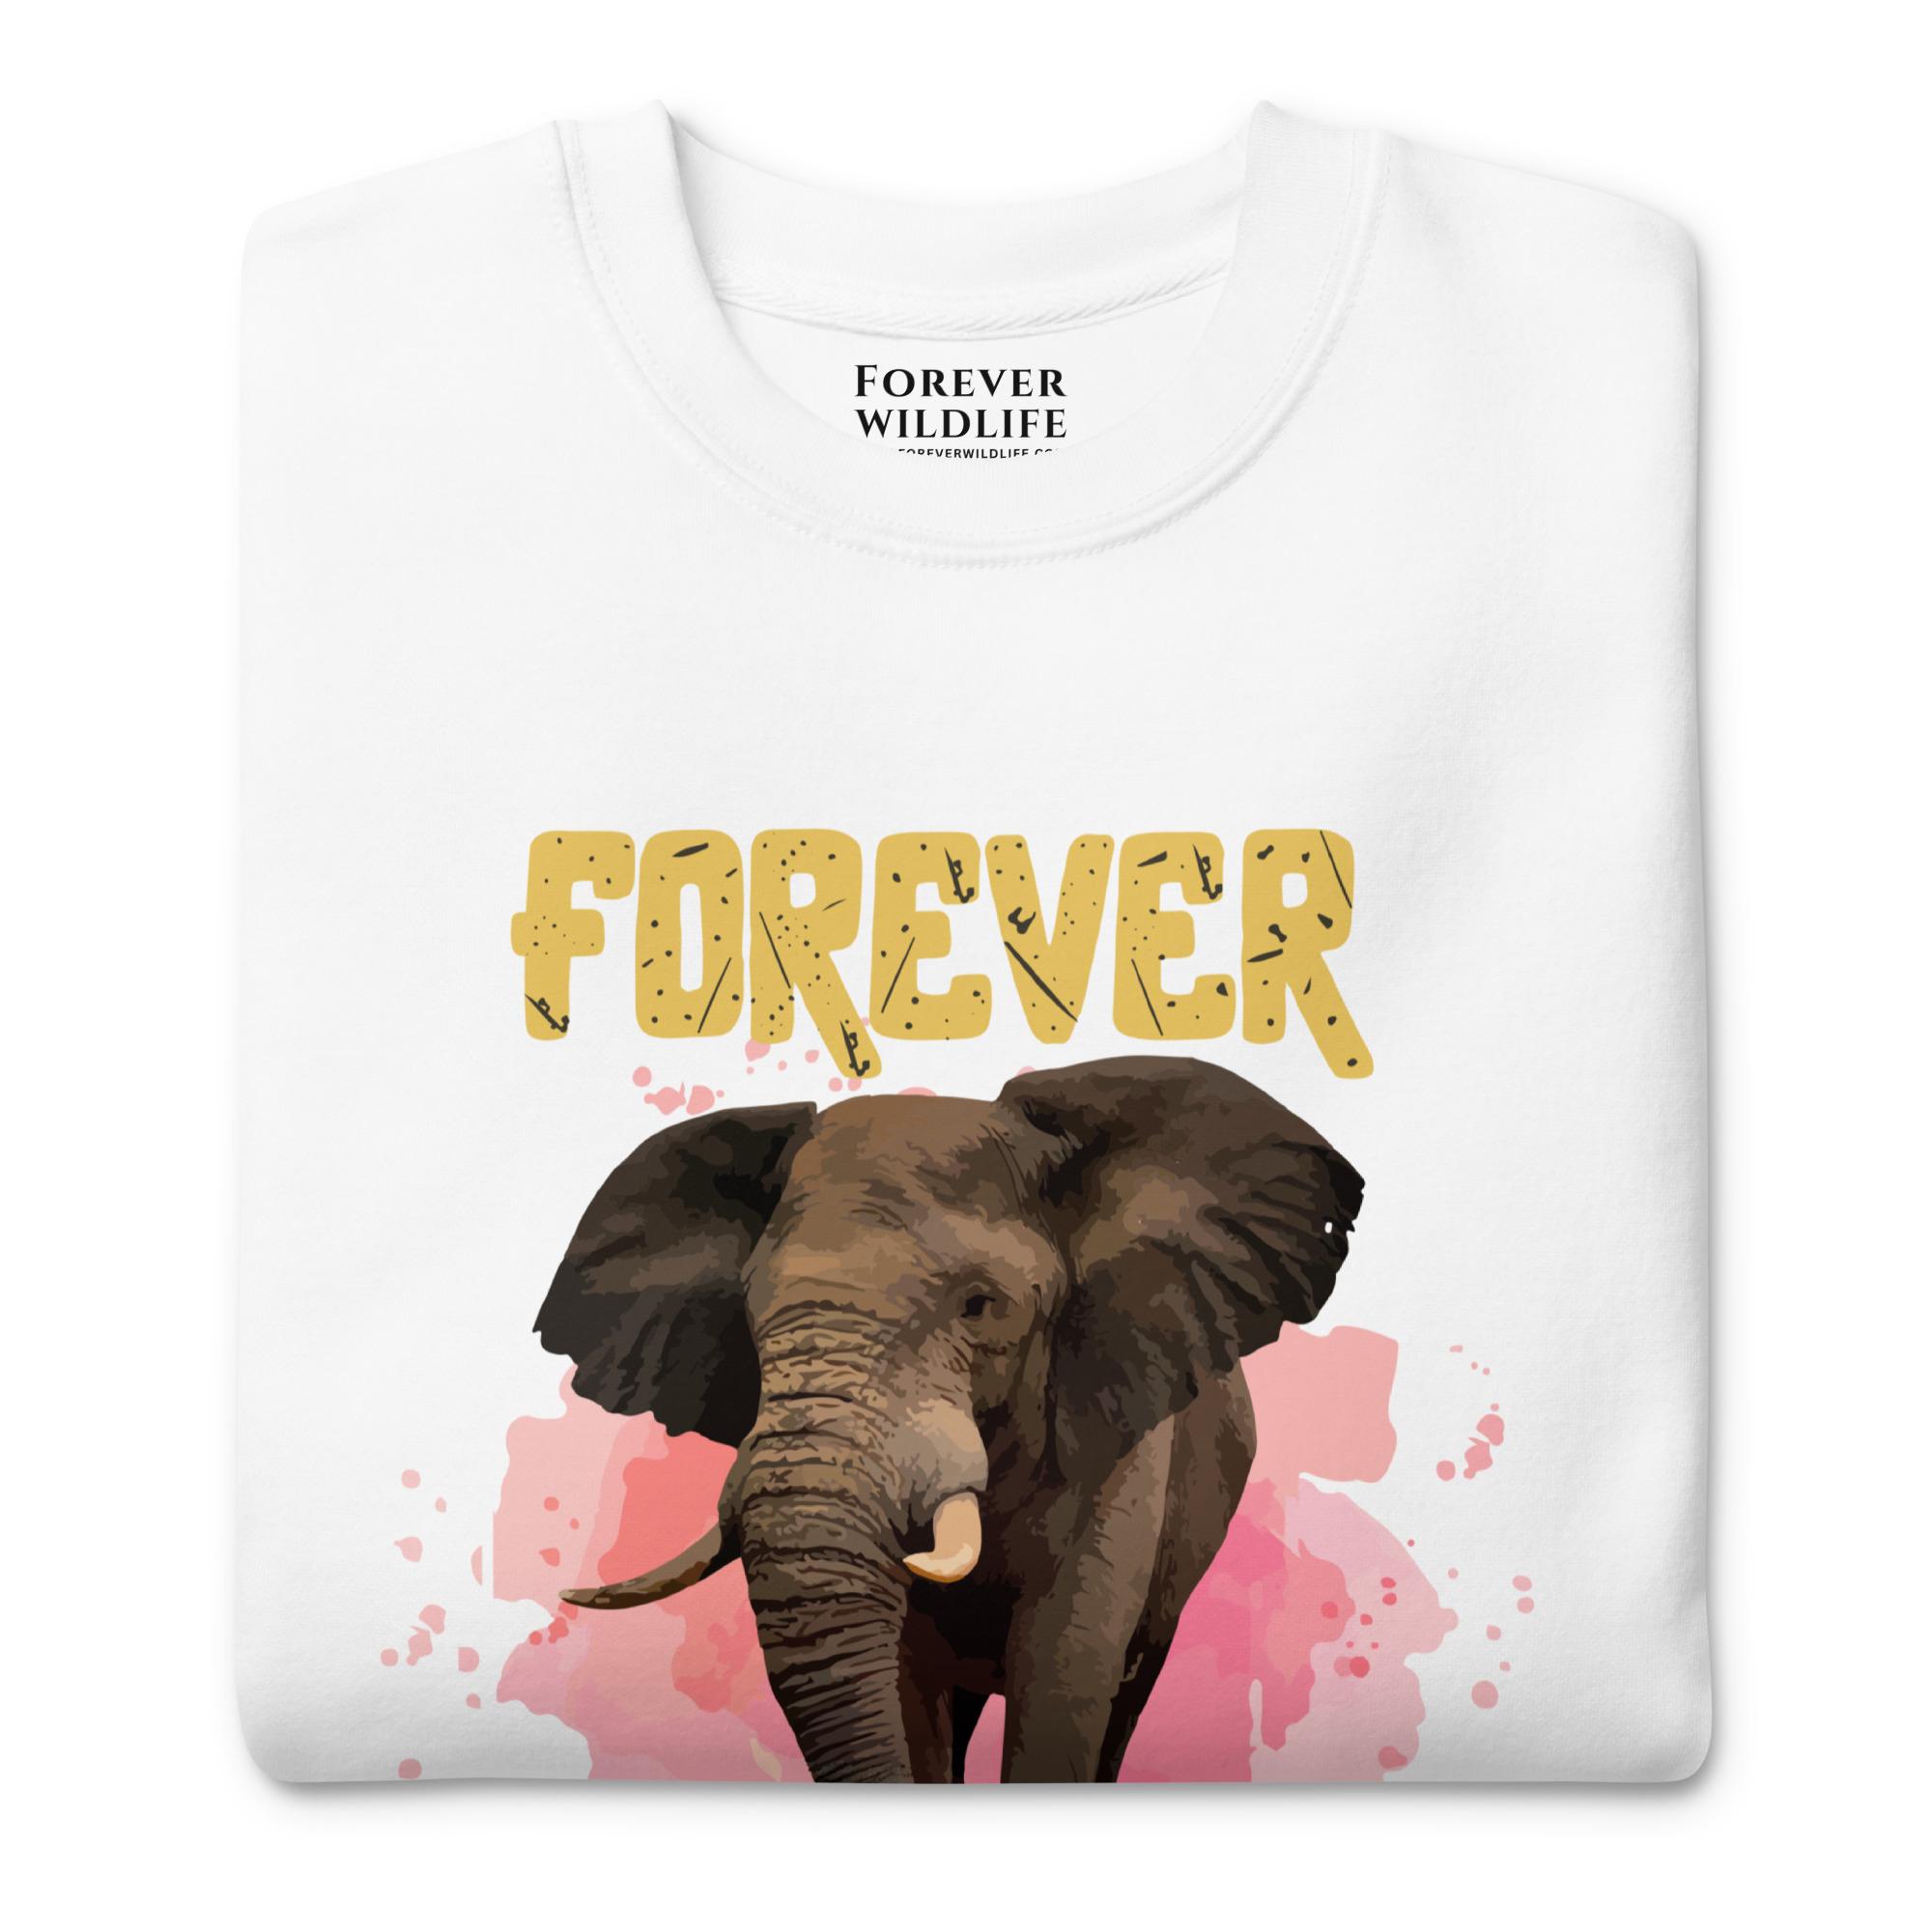 Elephant Sweatshirt in White-Premium Wildlife Animal Inspiration Sweatshirt Design, part of Wildlife Sweatshirts & Clothing from Forever Wildlife.